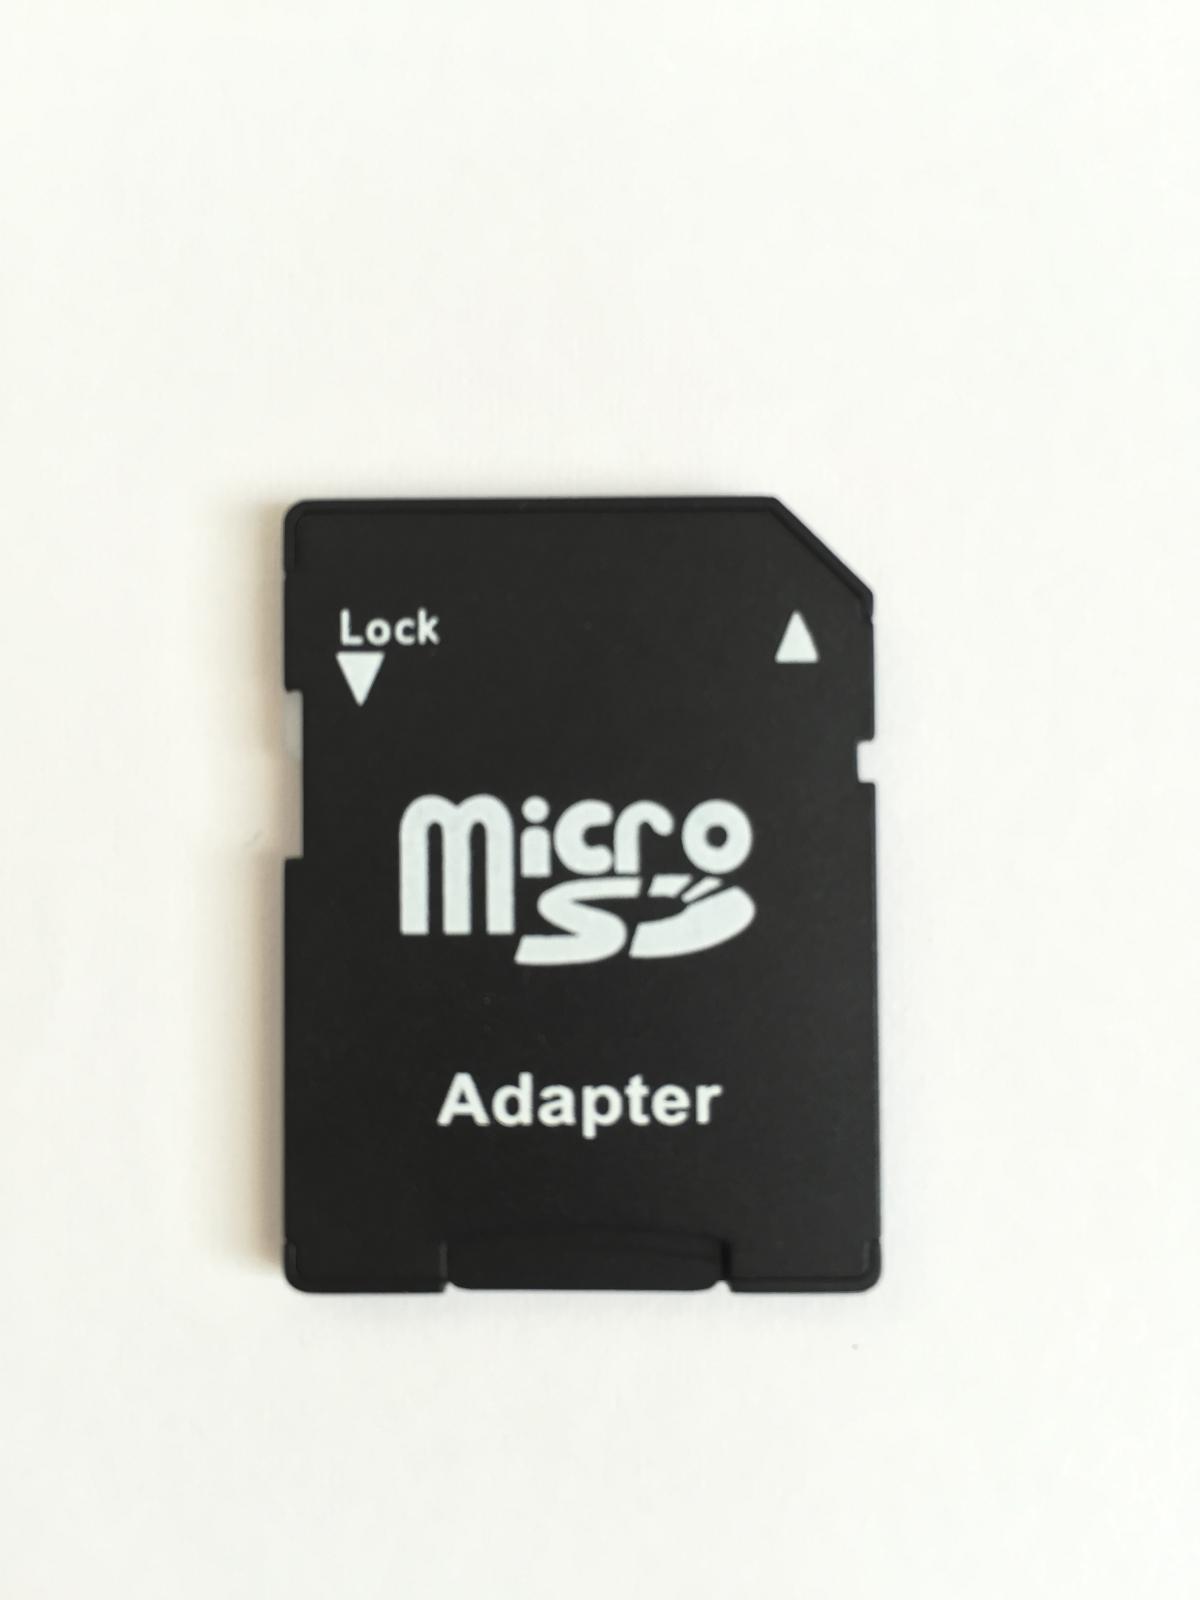 LOGSER AG - 64 GB Micro SDXC Speicherkarte class 10